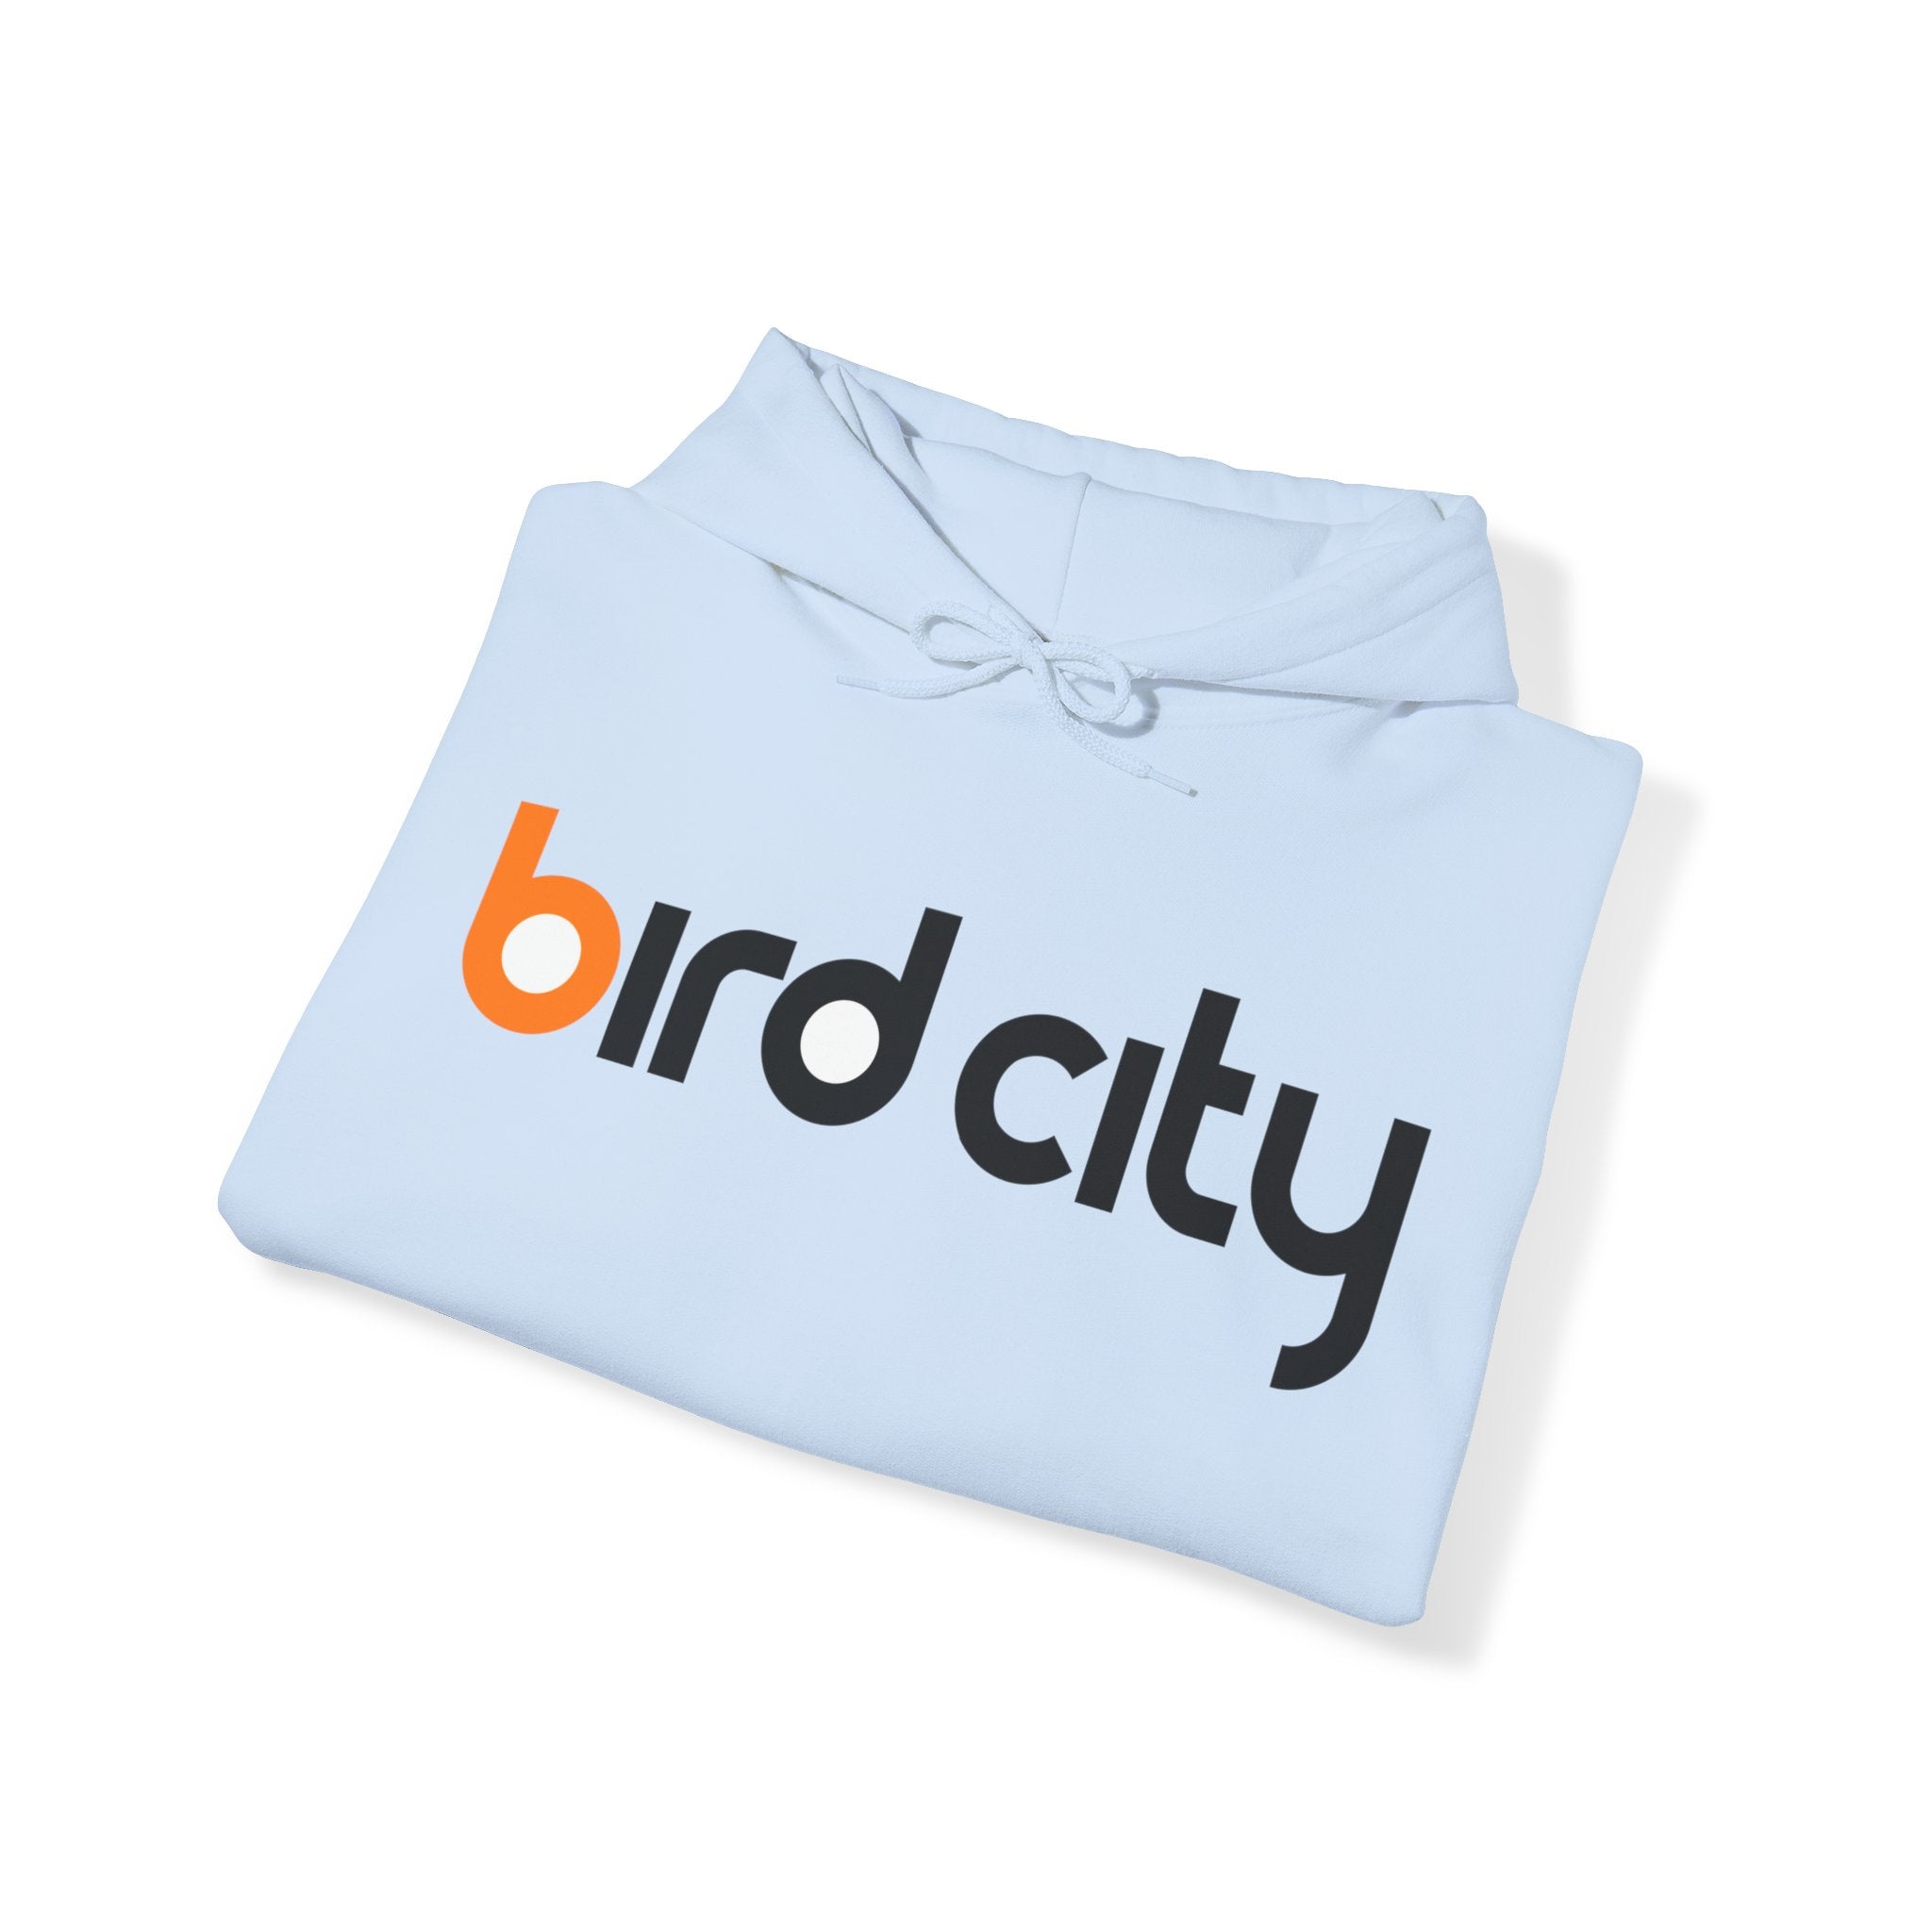 The Simple "Bird City" Hooded Sweatshirt